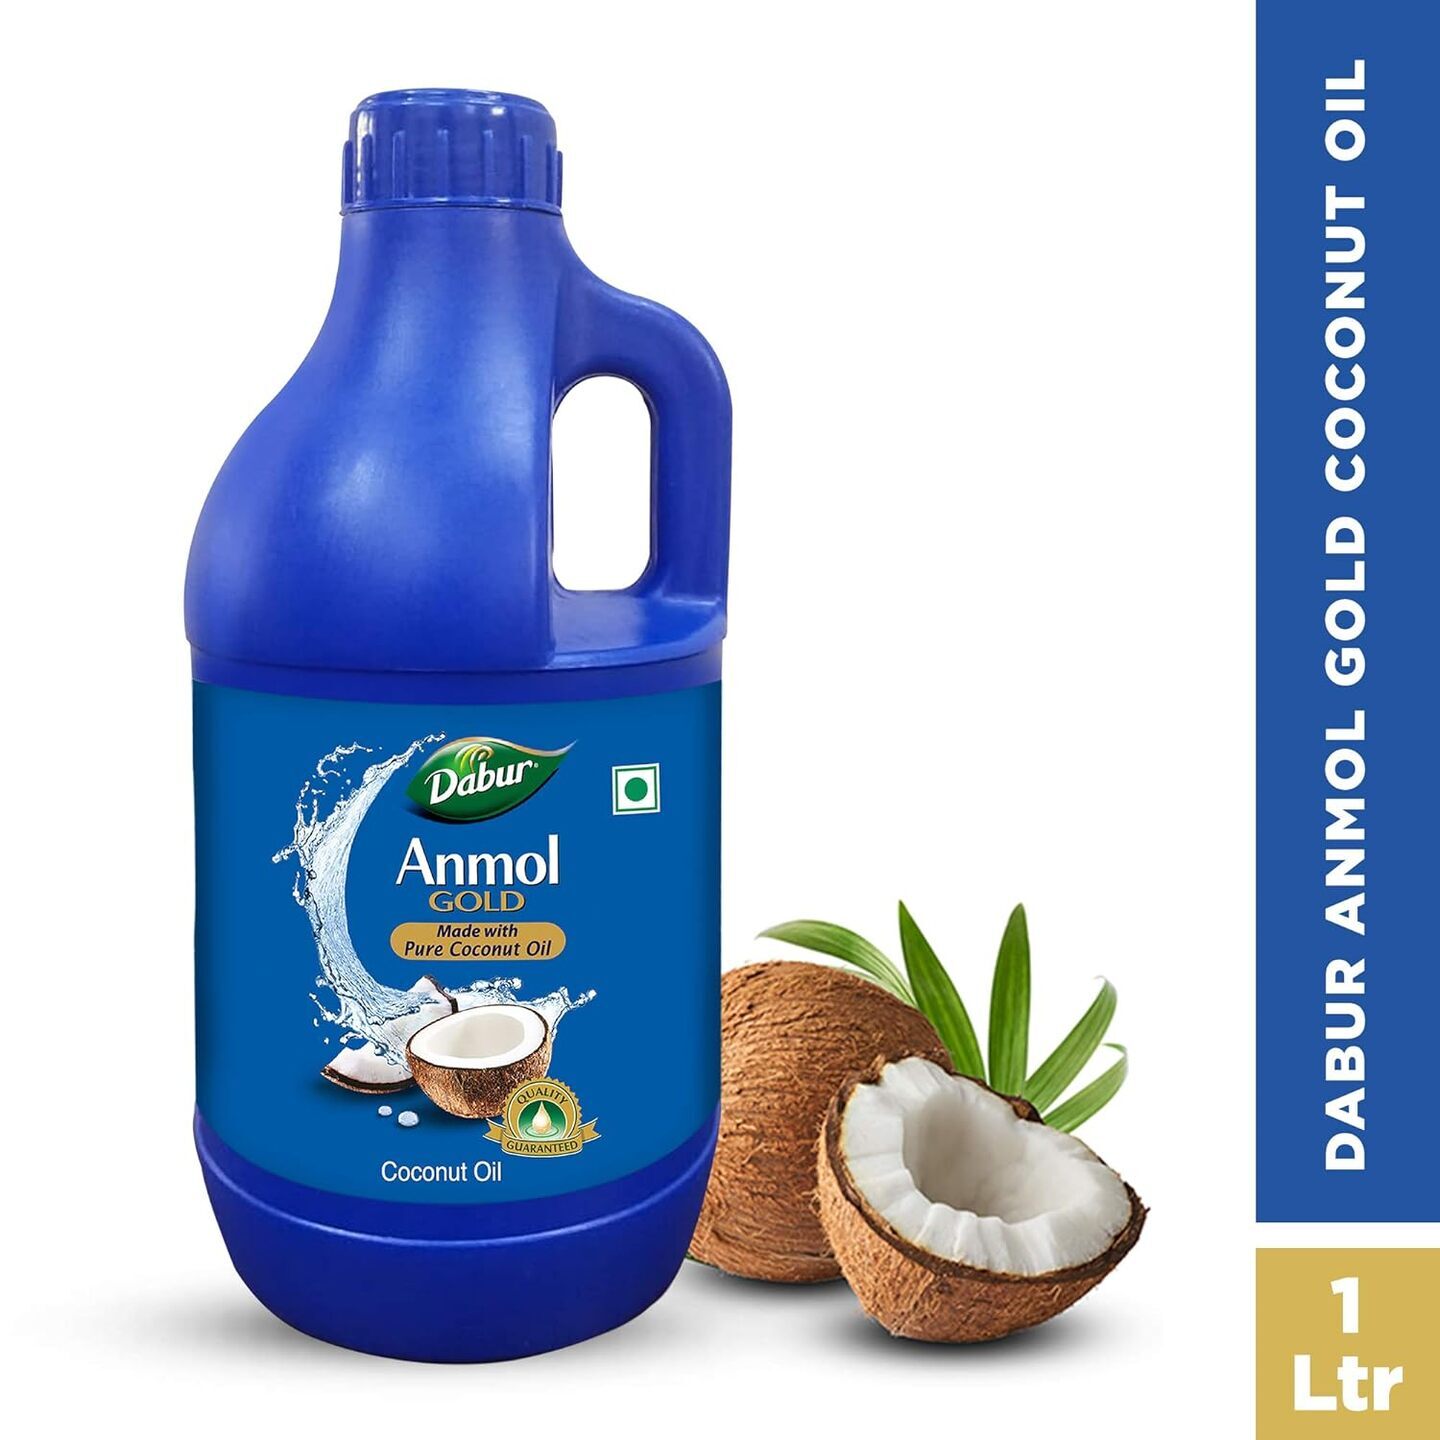 Dabur Anmol Gold 100 % Pure Coconut Oil - 1L | Natural | Nariyal Tel | Handpicked Sundried Coconuts | Multipurpose Oil